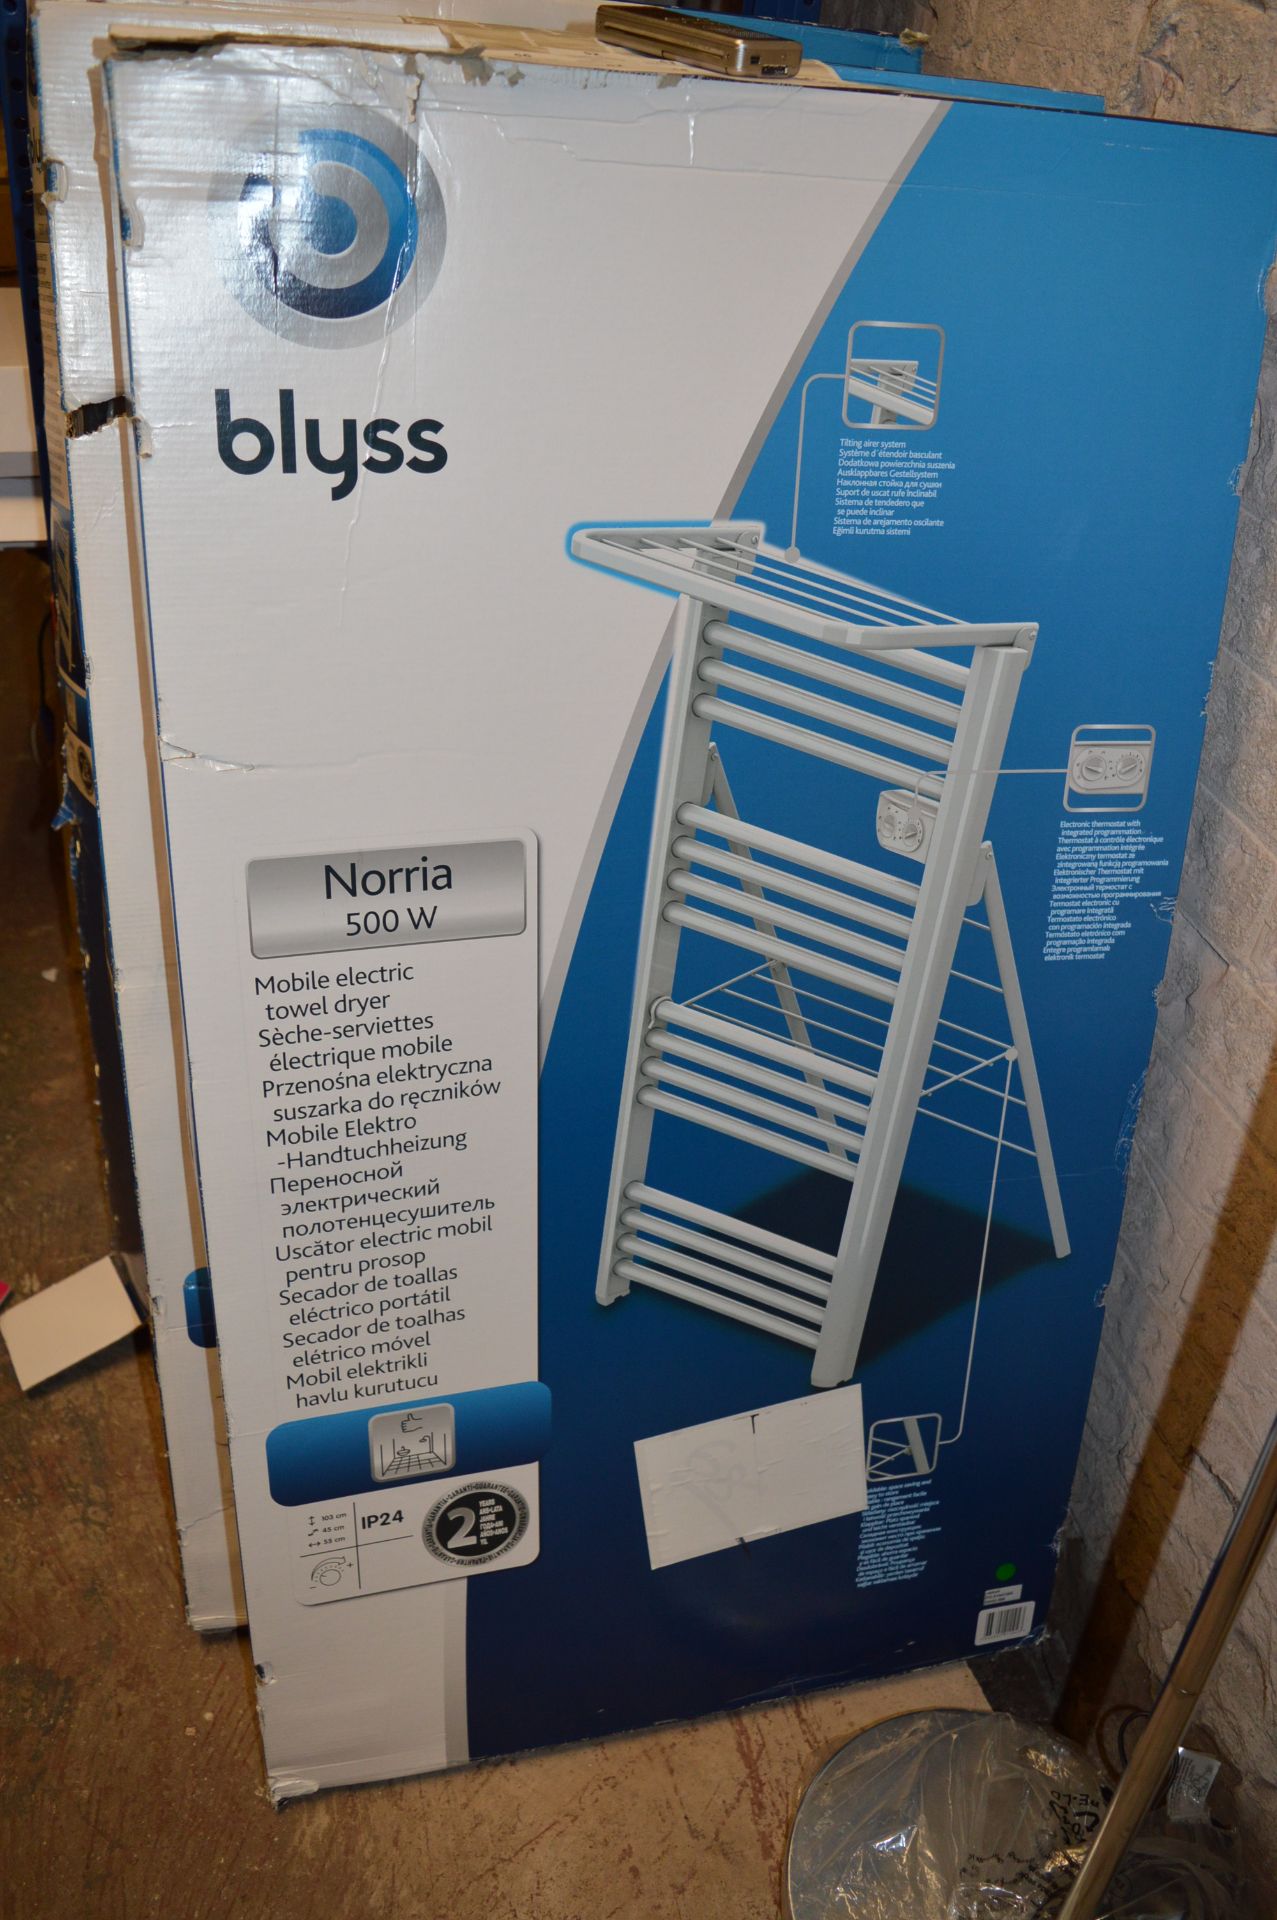 *Blyss Norris 500w Mobile Electric Towel Dryer